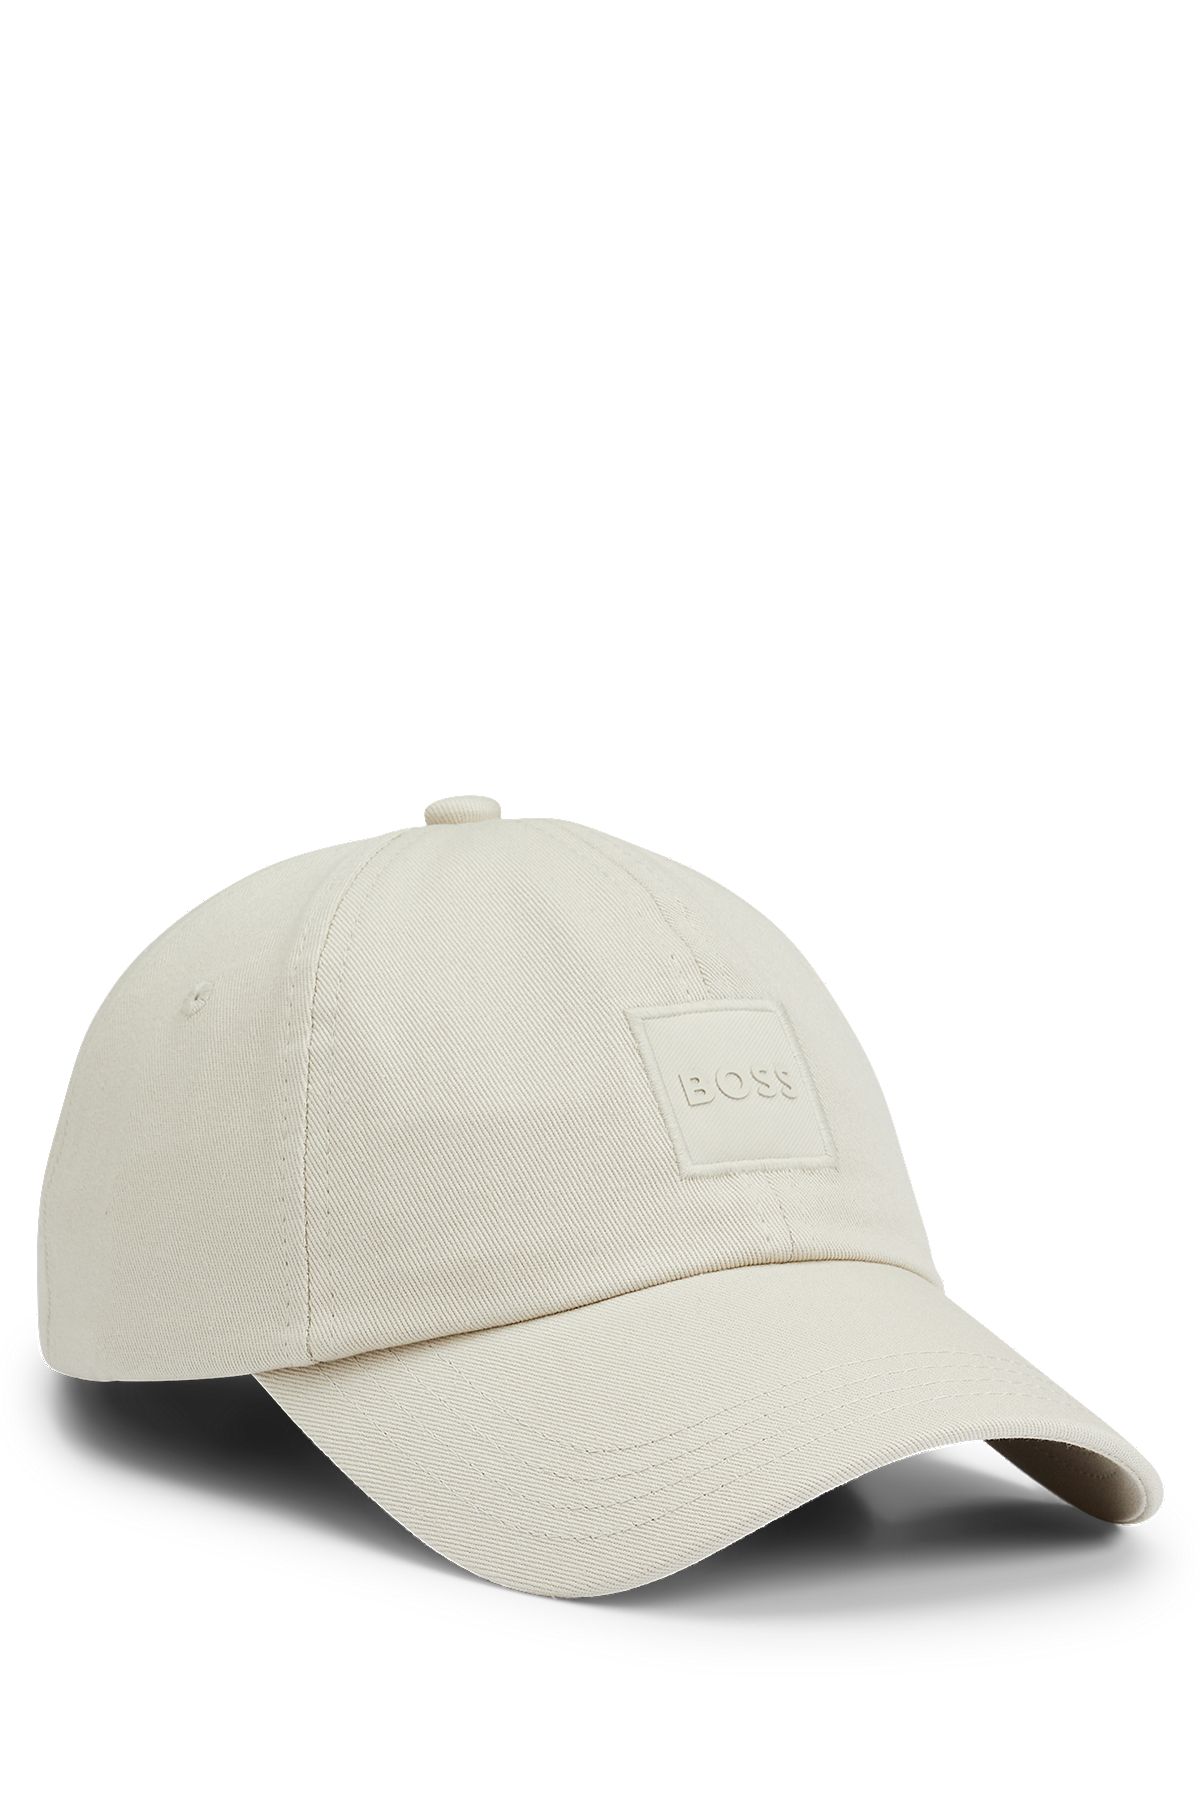 Cotton-twill cap with tonal logo patch, Light Beige